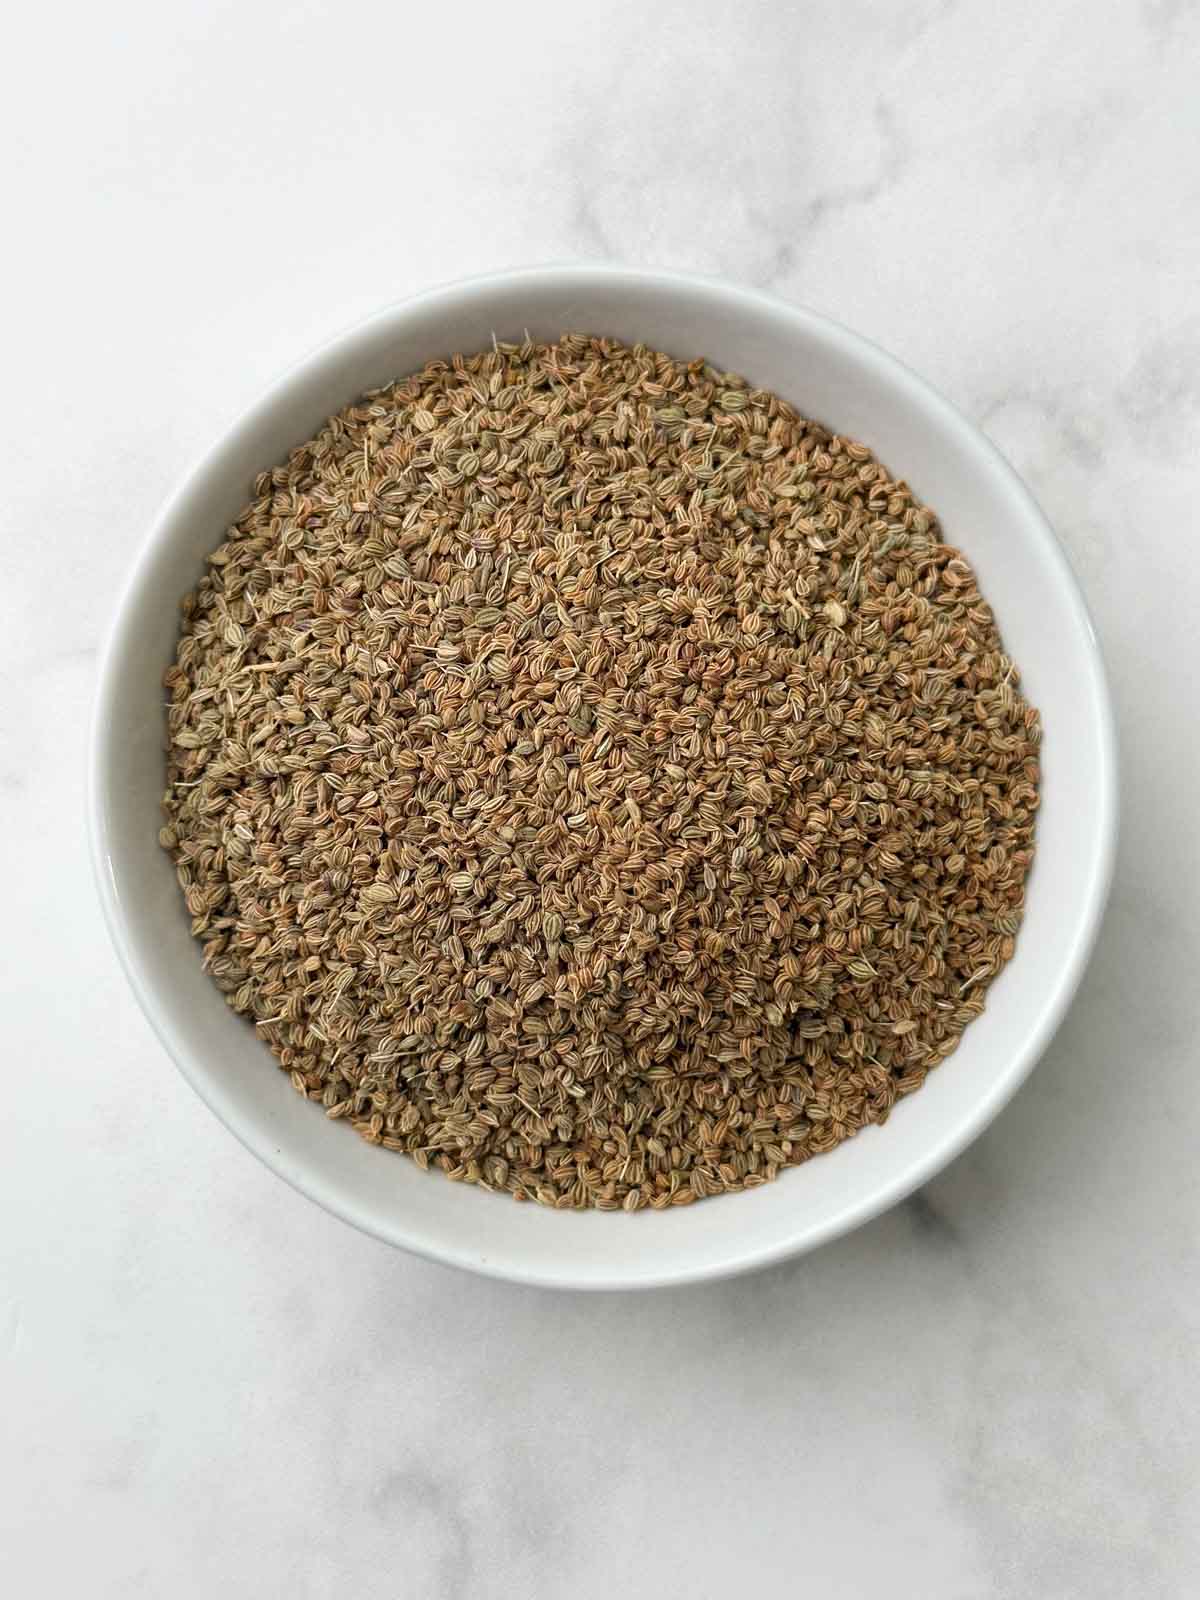 Carrom Seeds (Ajwain) in a bowl